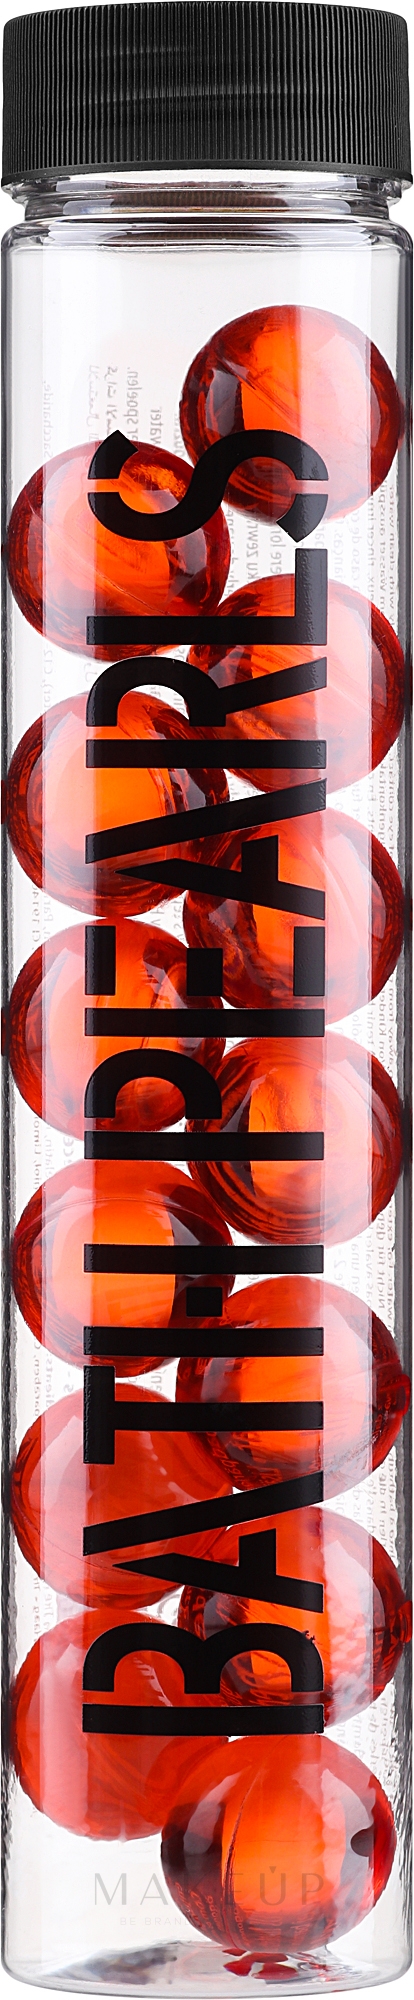 Rotes Badeöl mit Himbeer- und Amaryllis-Aroma - Mades Cosmetics Stackable Transparent Bath Pearls — Bild 13 St.